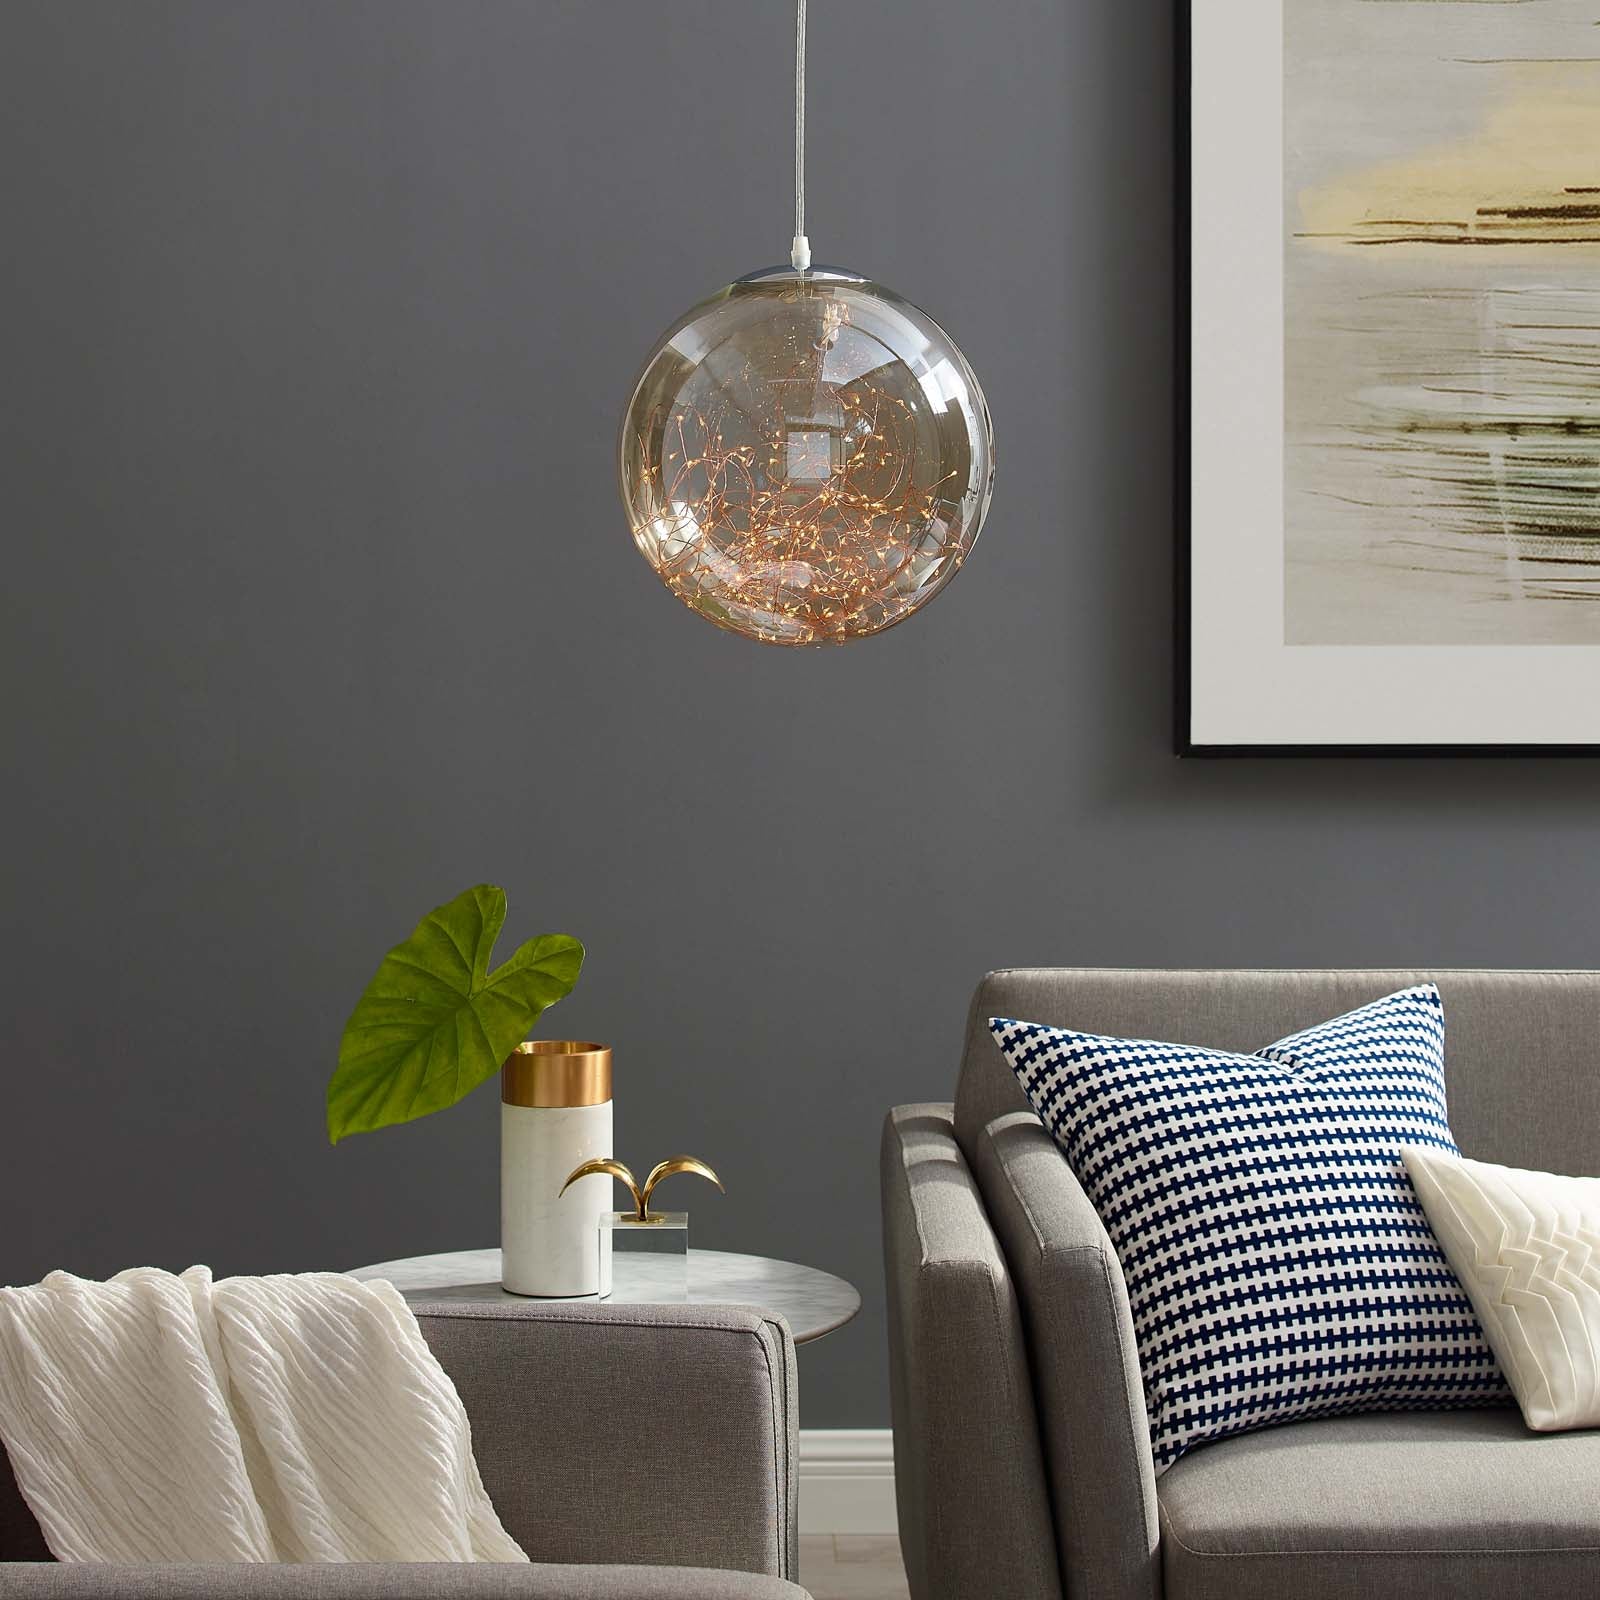 Modway Ceiling Lights - Fairy 8" Amber Glass Globe Ceiling Light Pendant Chandelier Chrome